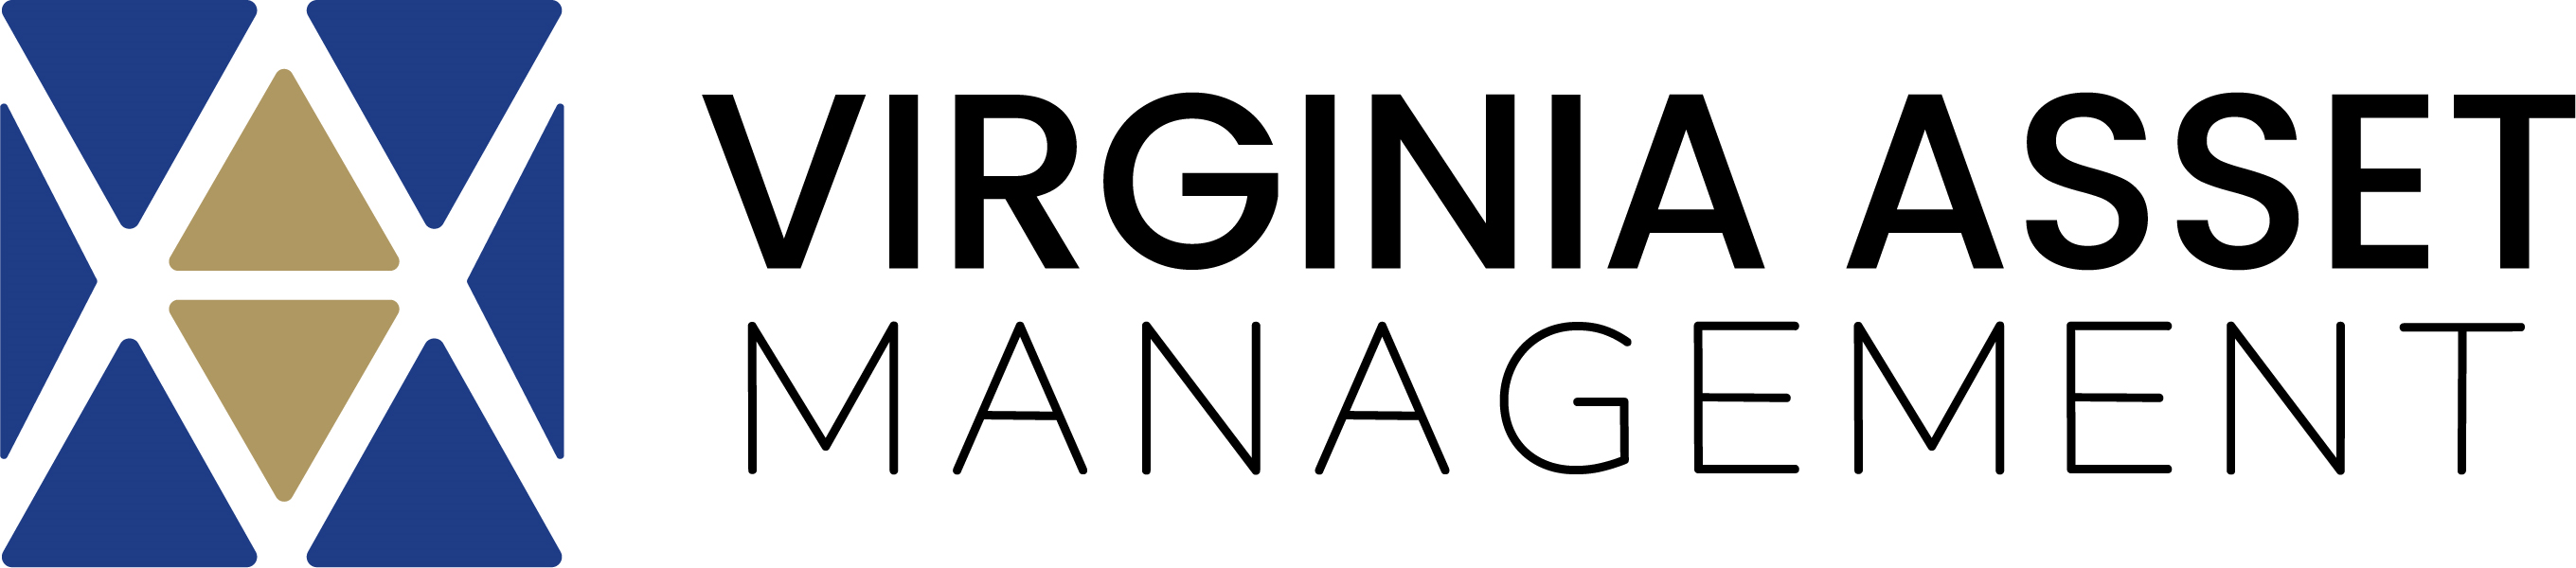 Virginia Asset Management logo